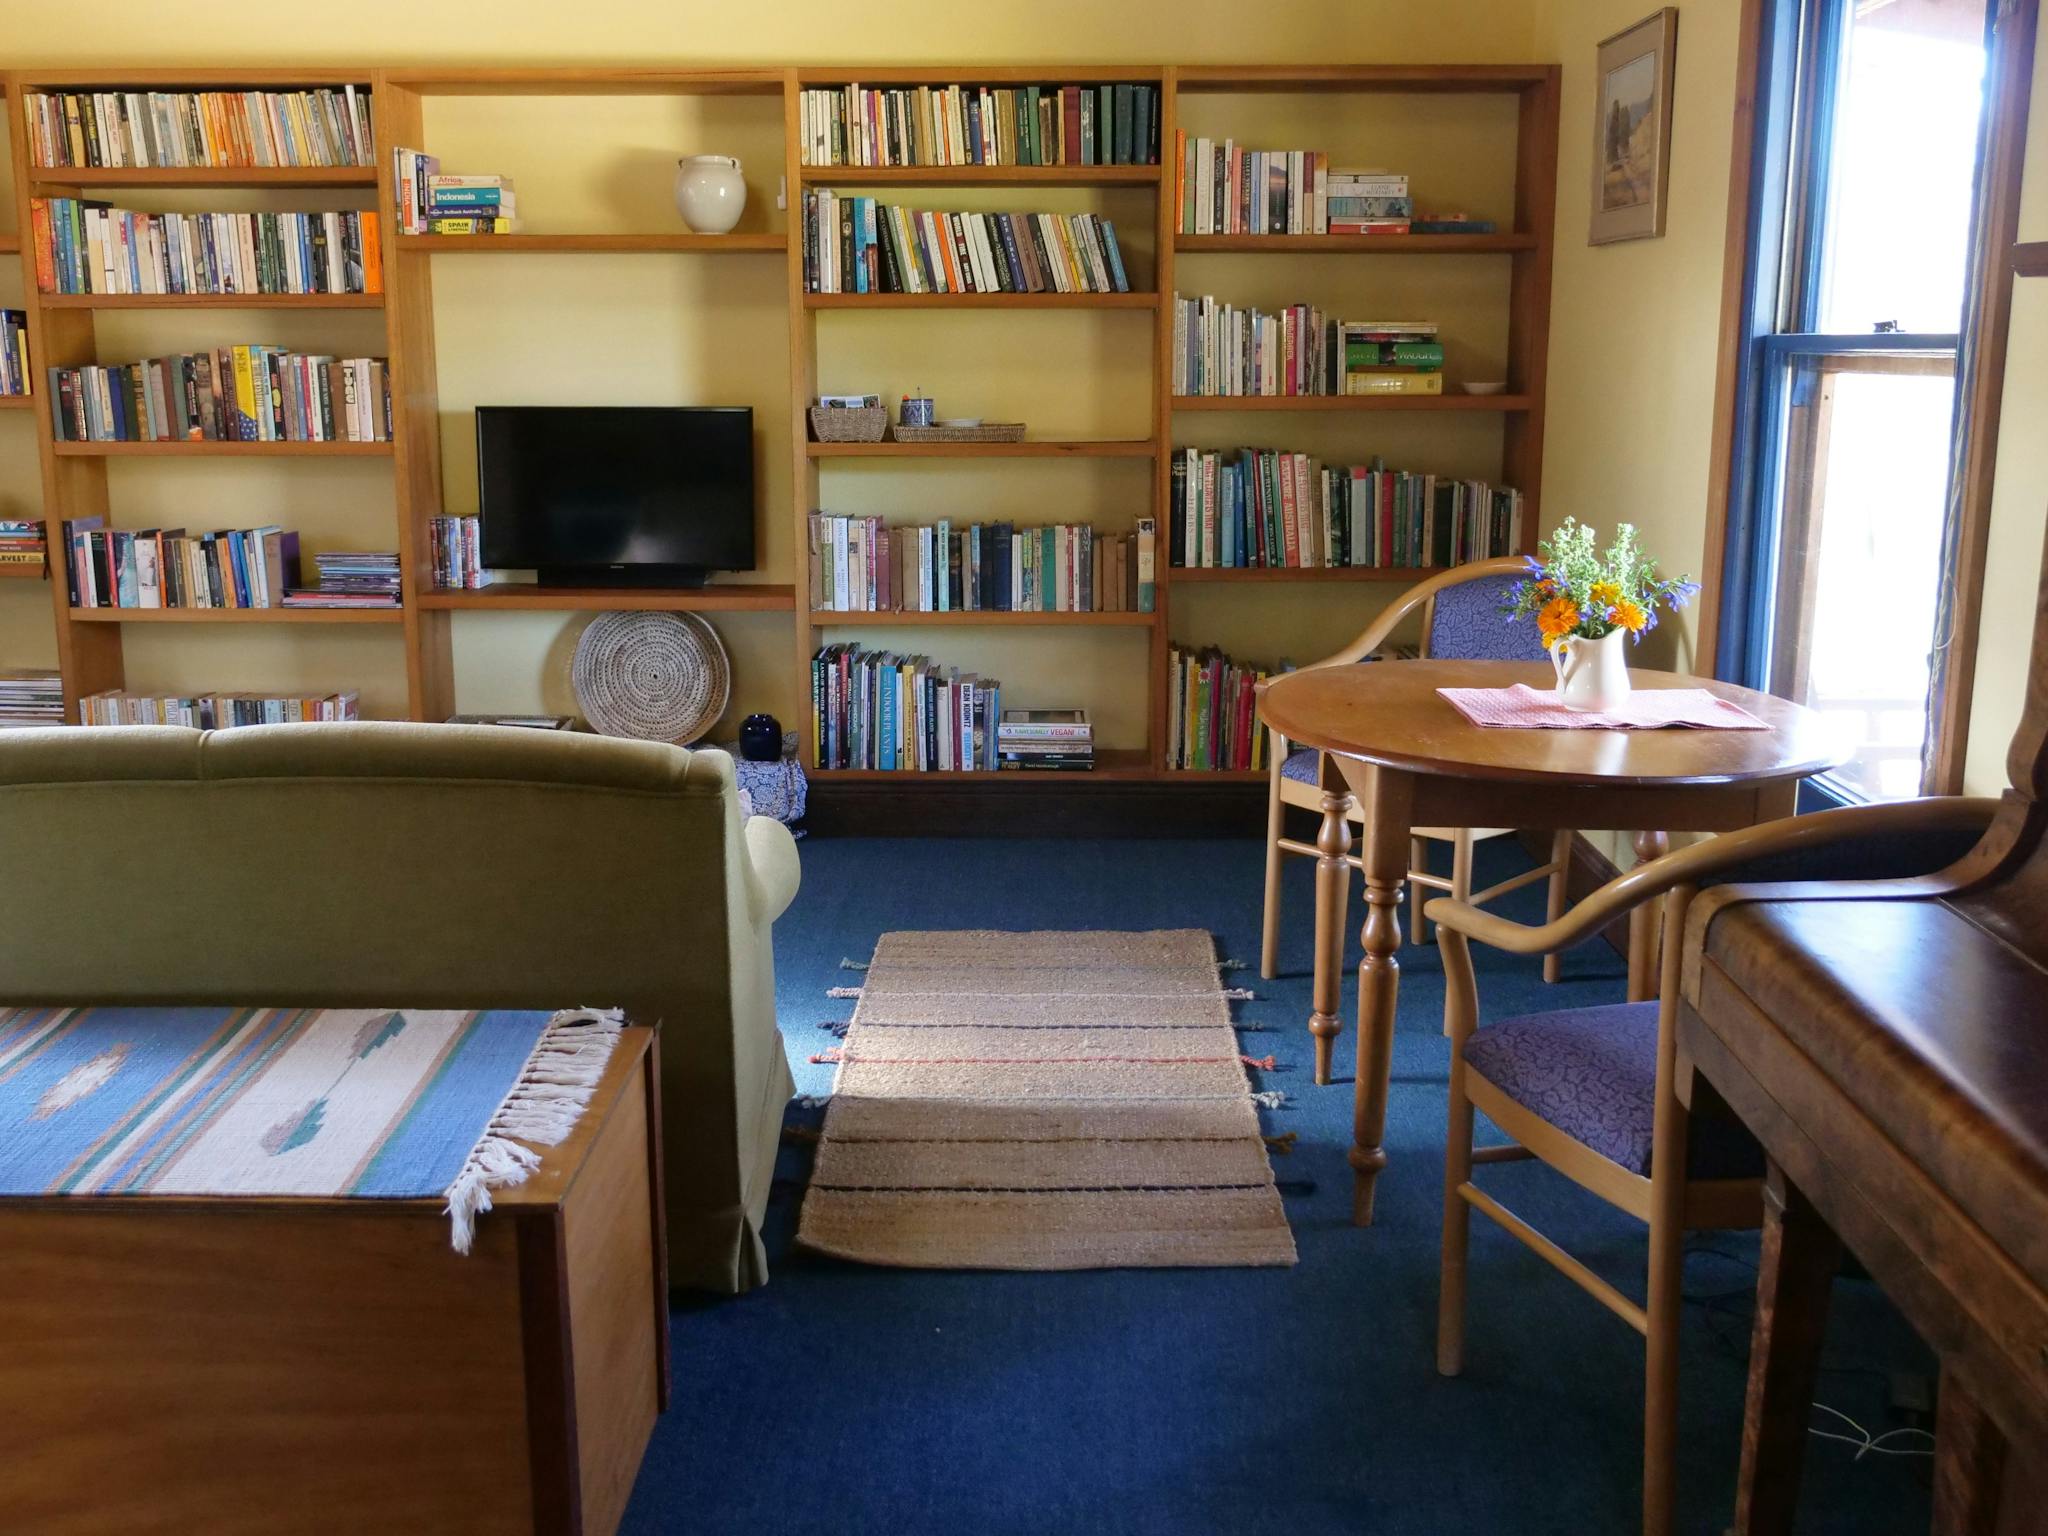 Living area showing extensive bookshelf and abundant books